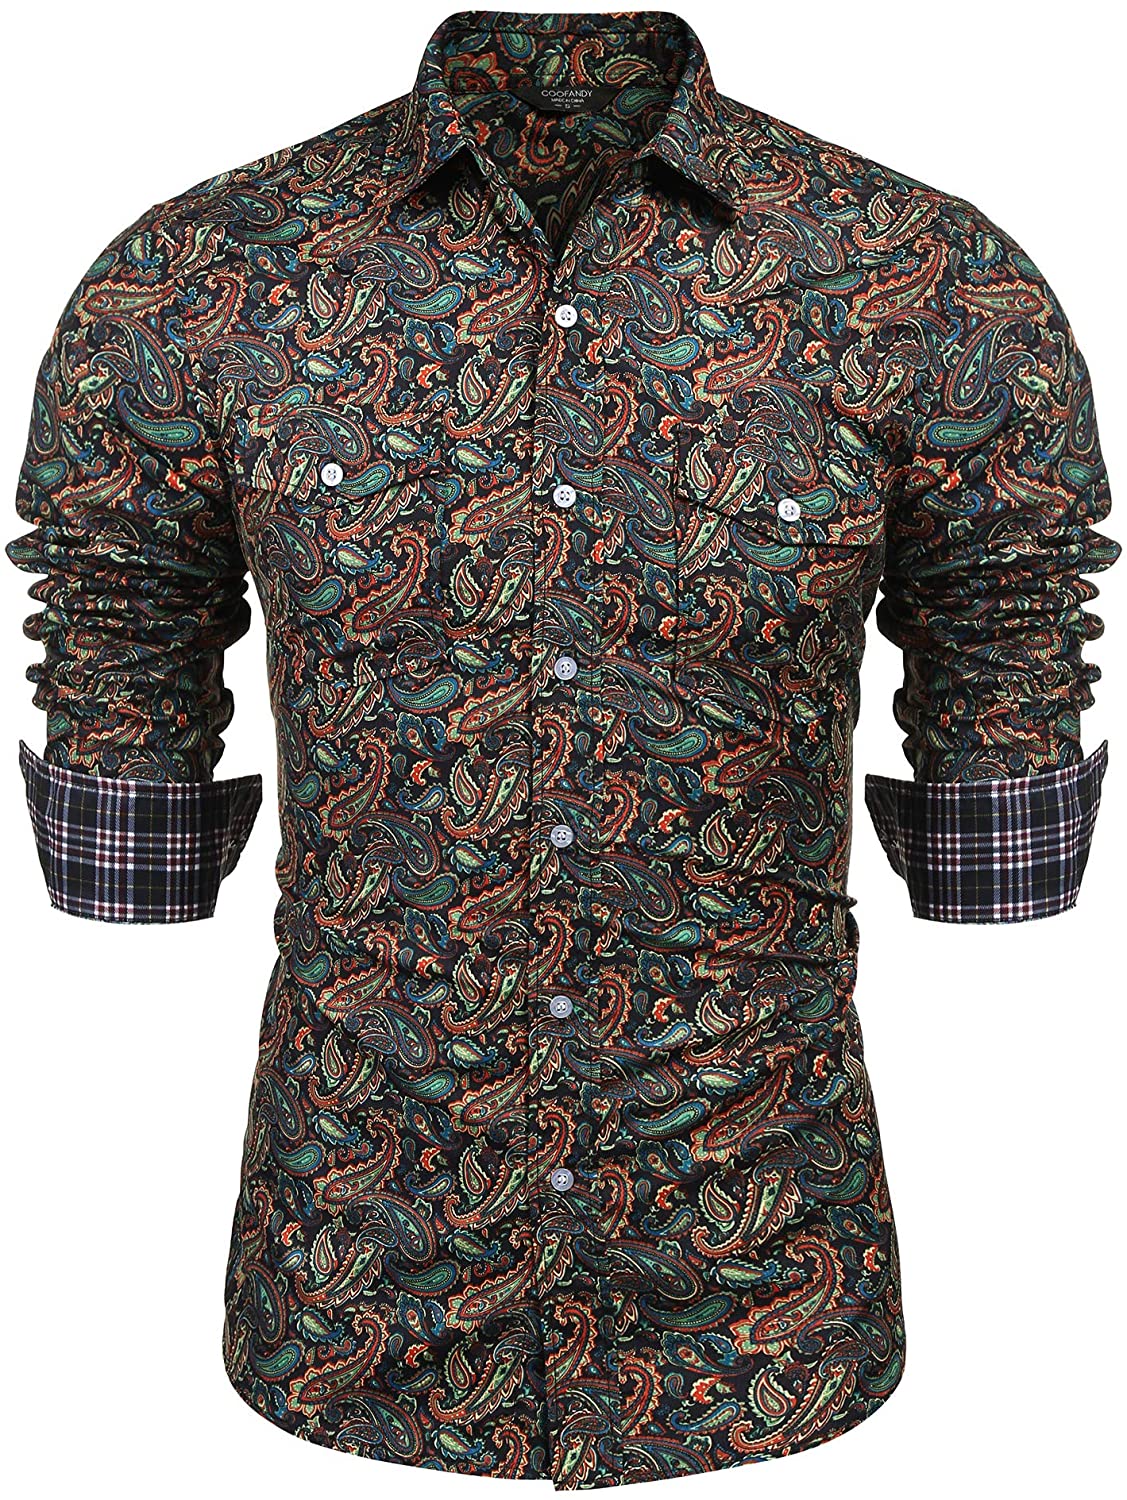 COOFANDY Mens Floral Dress Shirt Slim Fit Casual Paisley Printed Shirt Long Sleeve Button Down Shirts